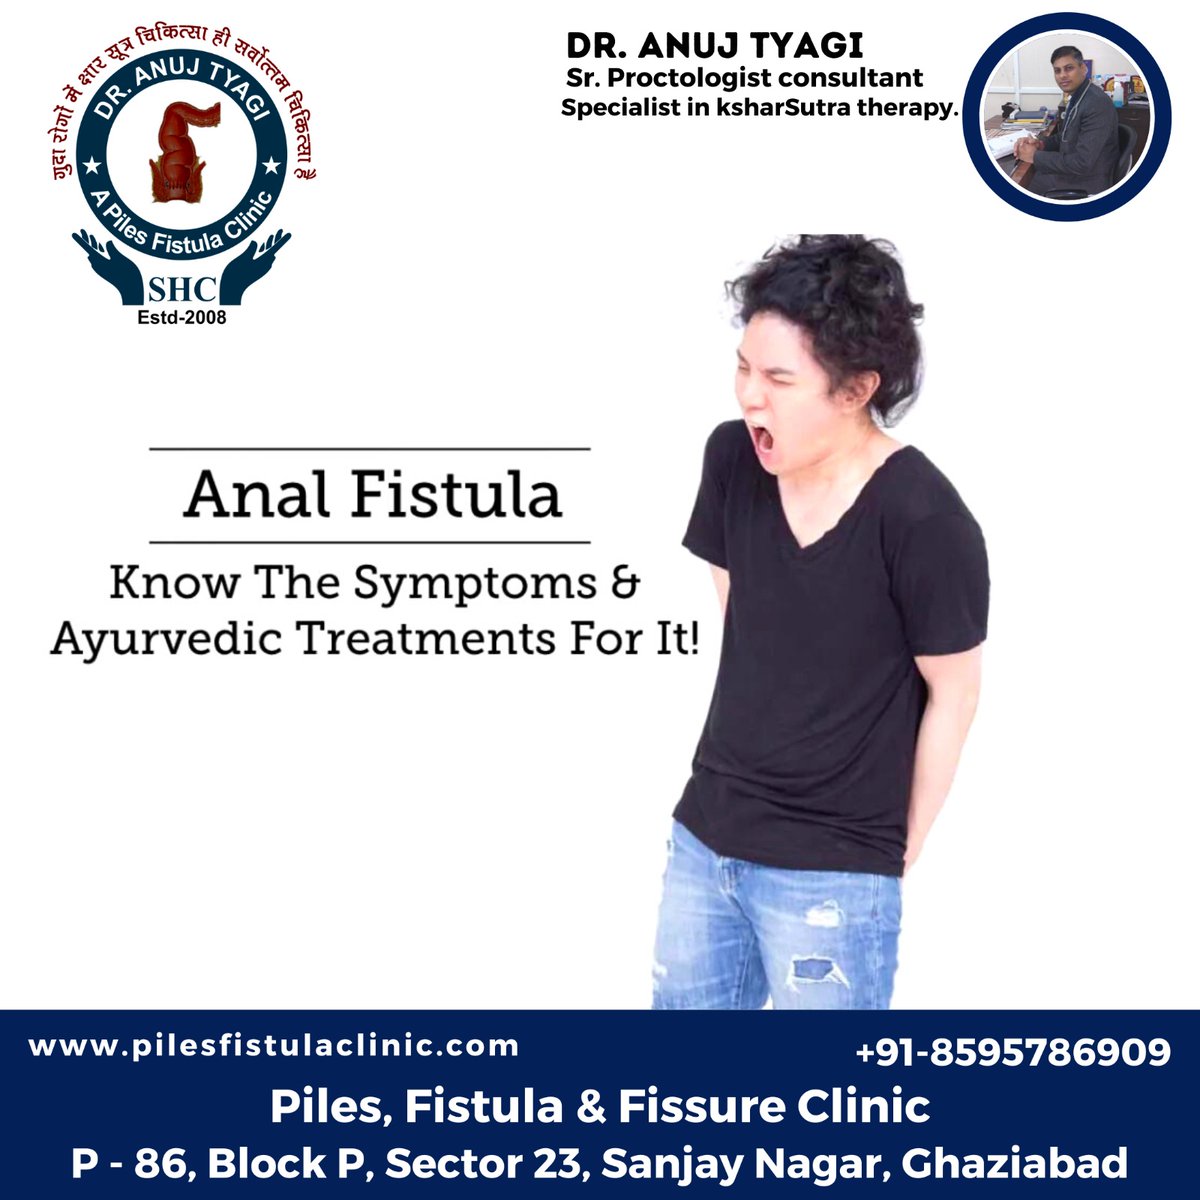 Shedding light on anal fistulas: recognizing signs and exploring Ayurvedic remedies. 🌿🩺 #FistulaAwareness #AyurvedicHealing' #PileFreeLife #ReliefAtLast'Call- 085957 86909
Visit - pilesfistulaclinic.com
#piles #PilesTreatment #Fistula #Fissure #KsharSutra #proctologist